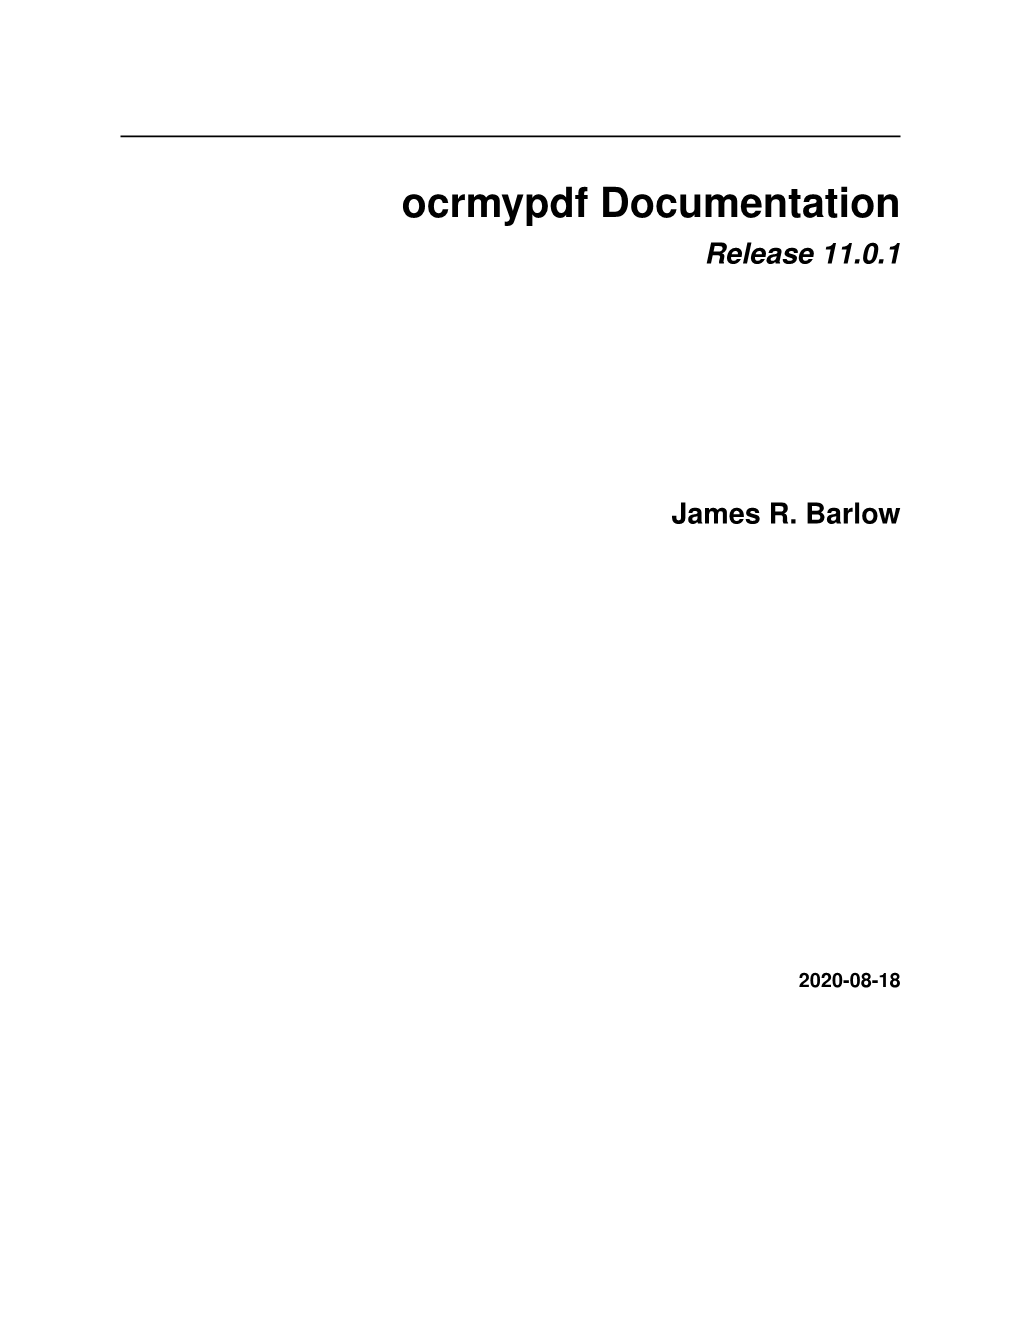 Ocrmypdf Documentation Release 11.0.1 James R. Barlow